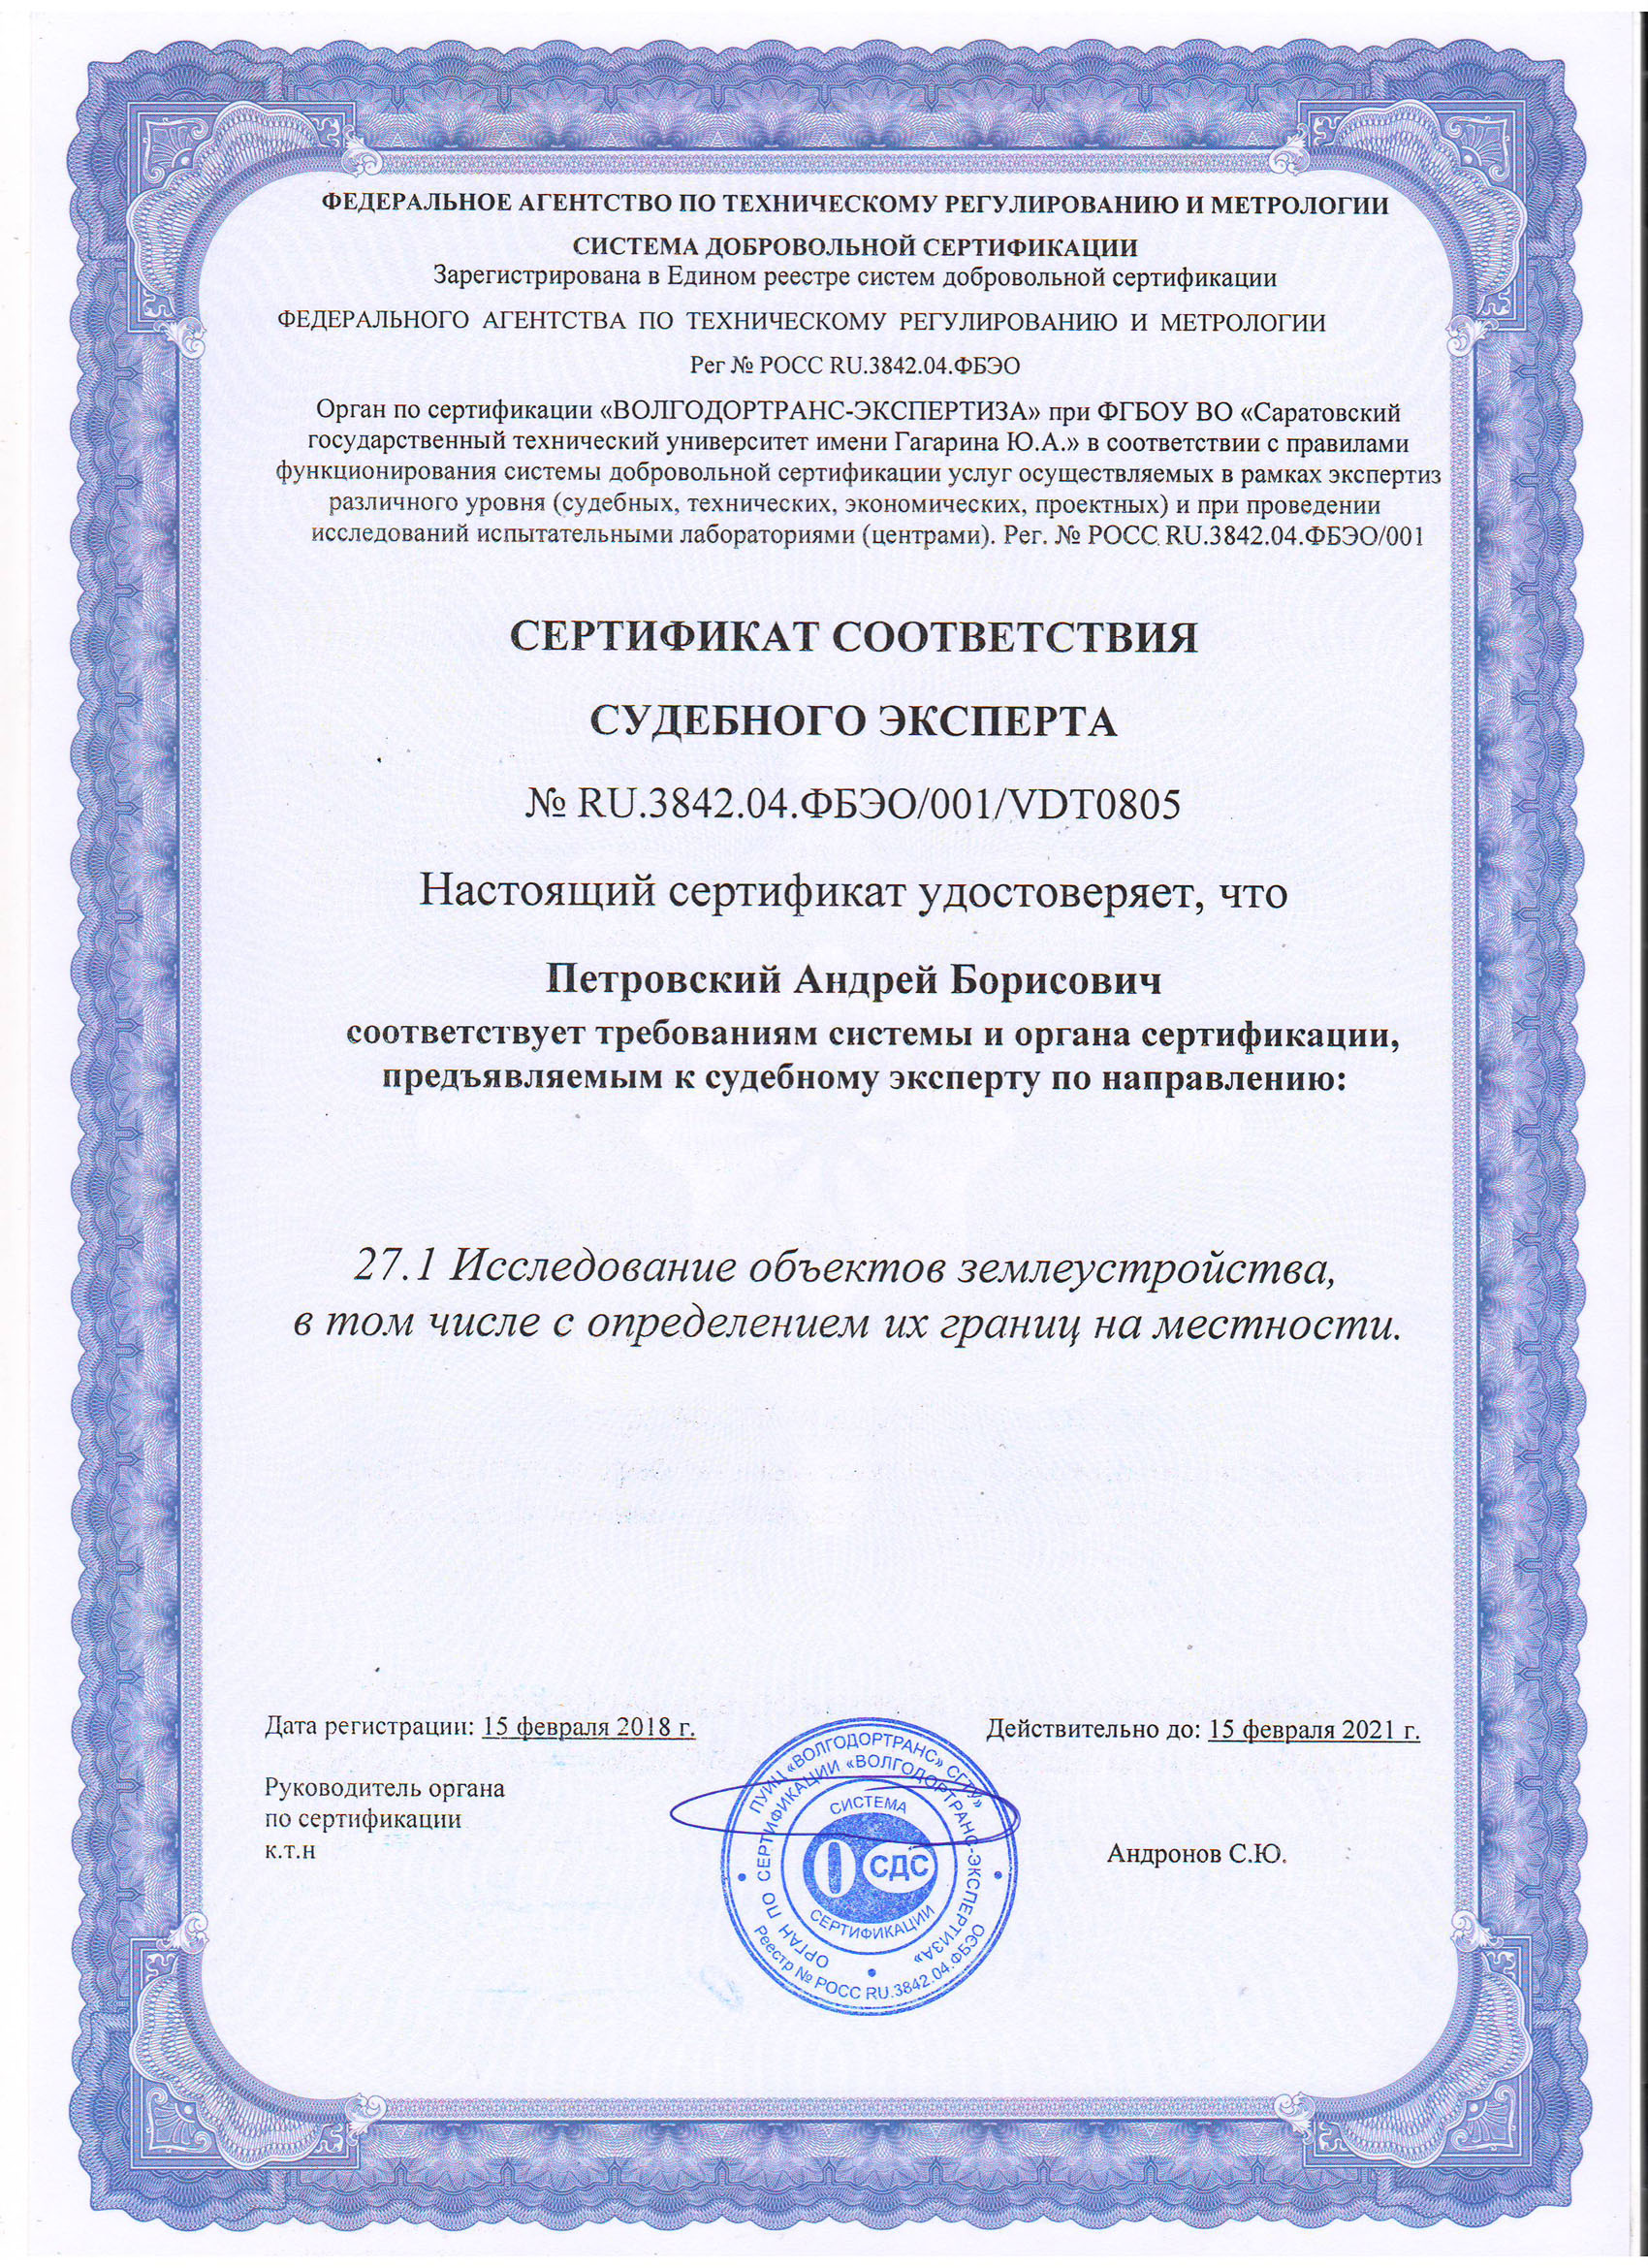 Сертификат Петровский Андрей Борисович